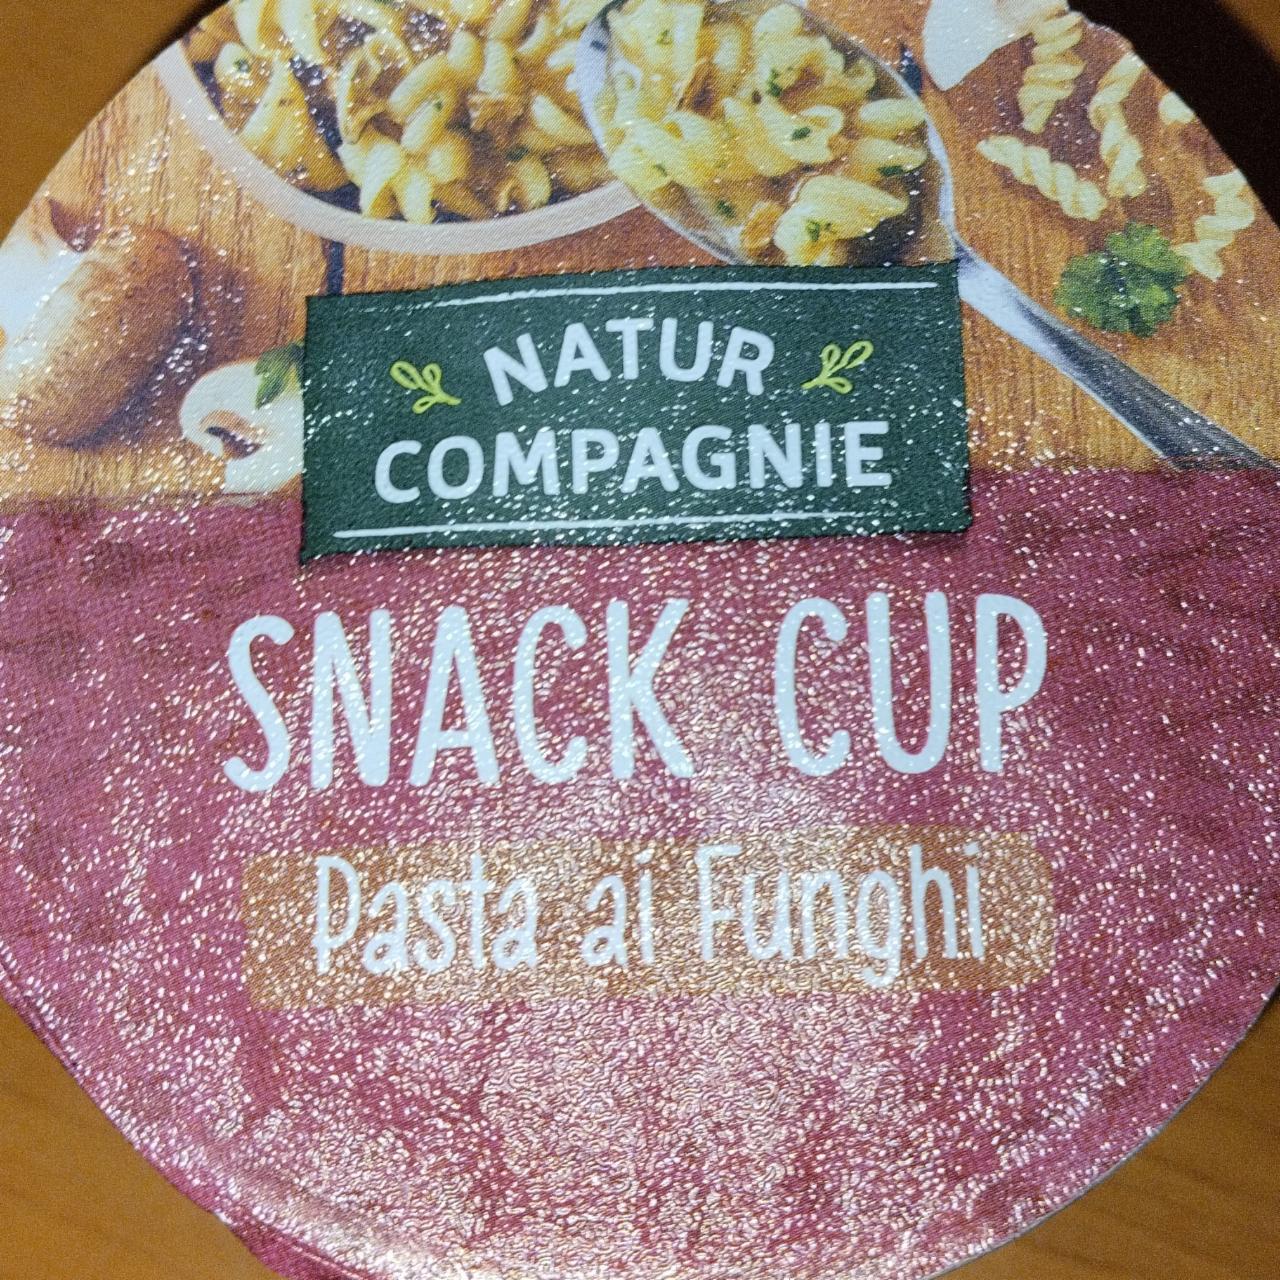 Fotografie - Snack cup Pasta ai Funghi Natur Compagnie